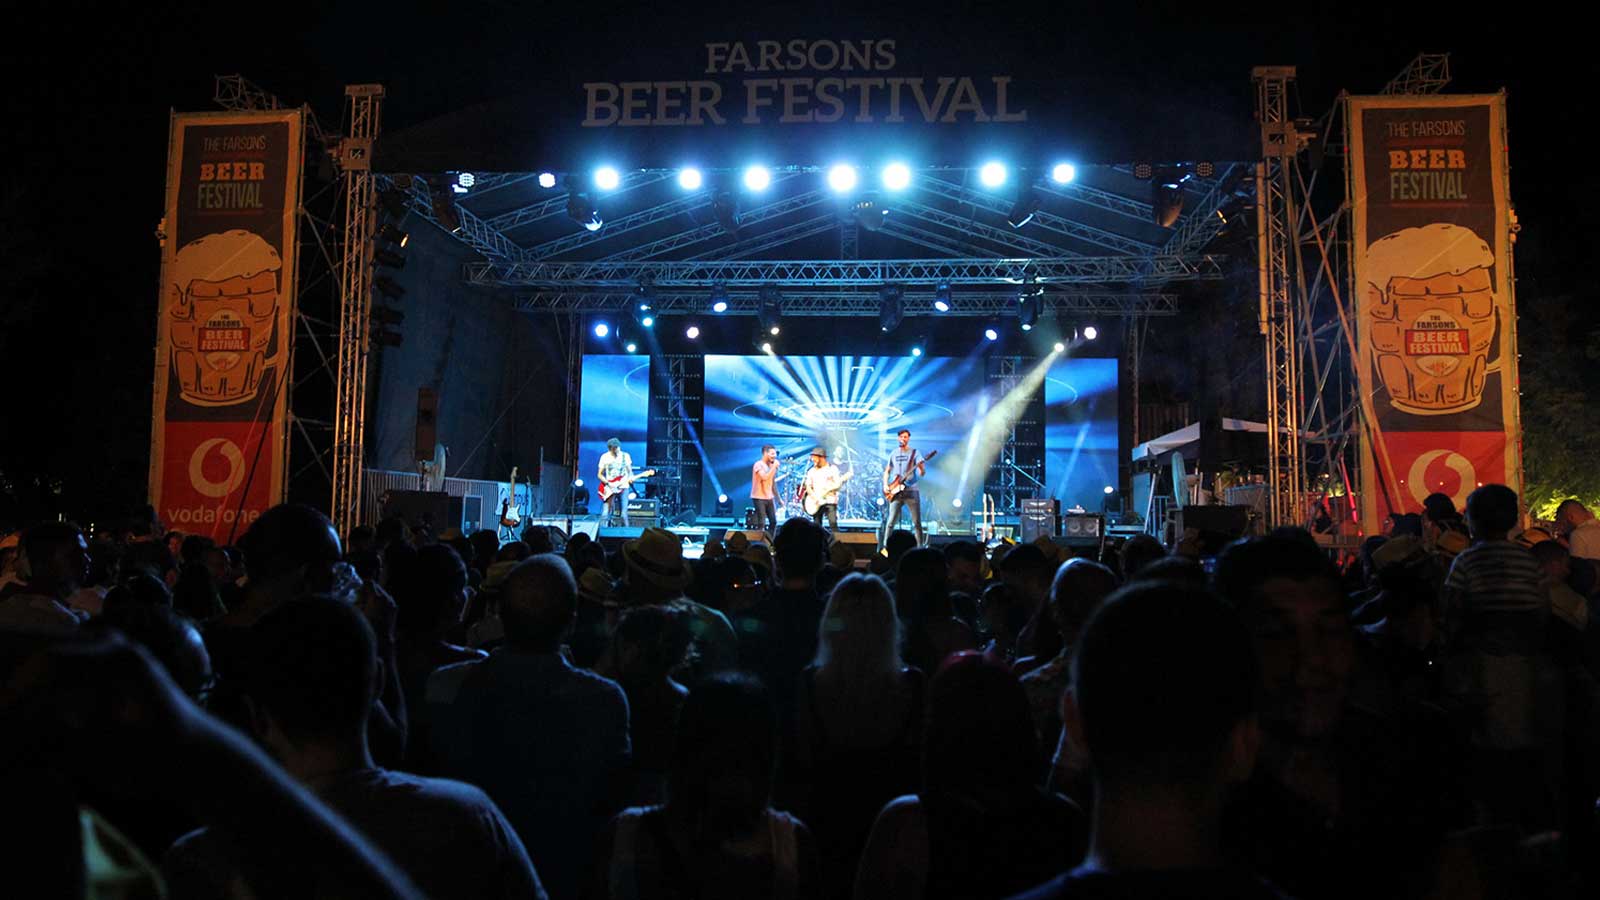 The Farsons Beer Festival starts tonight  